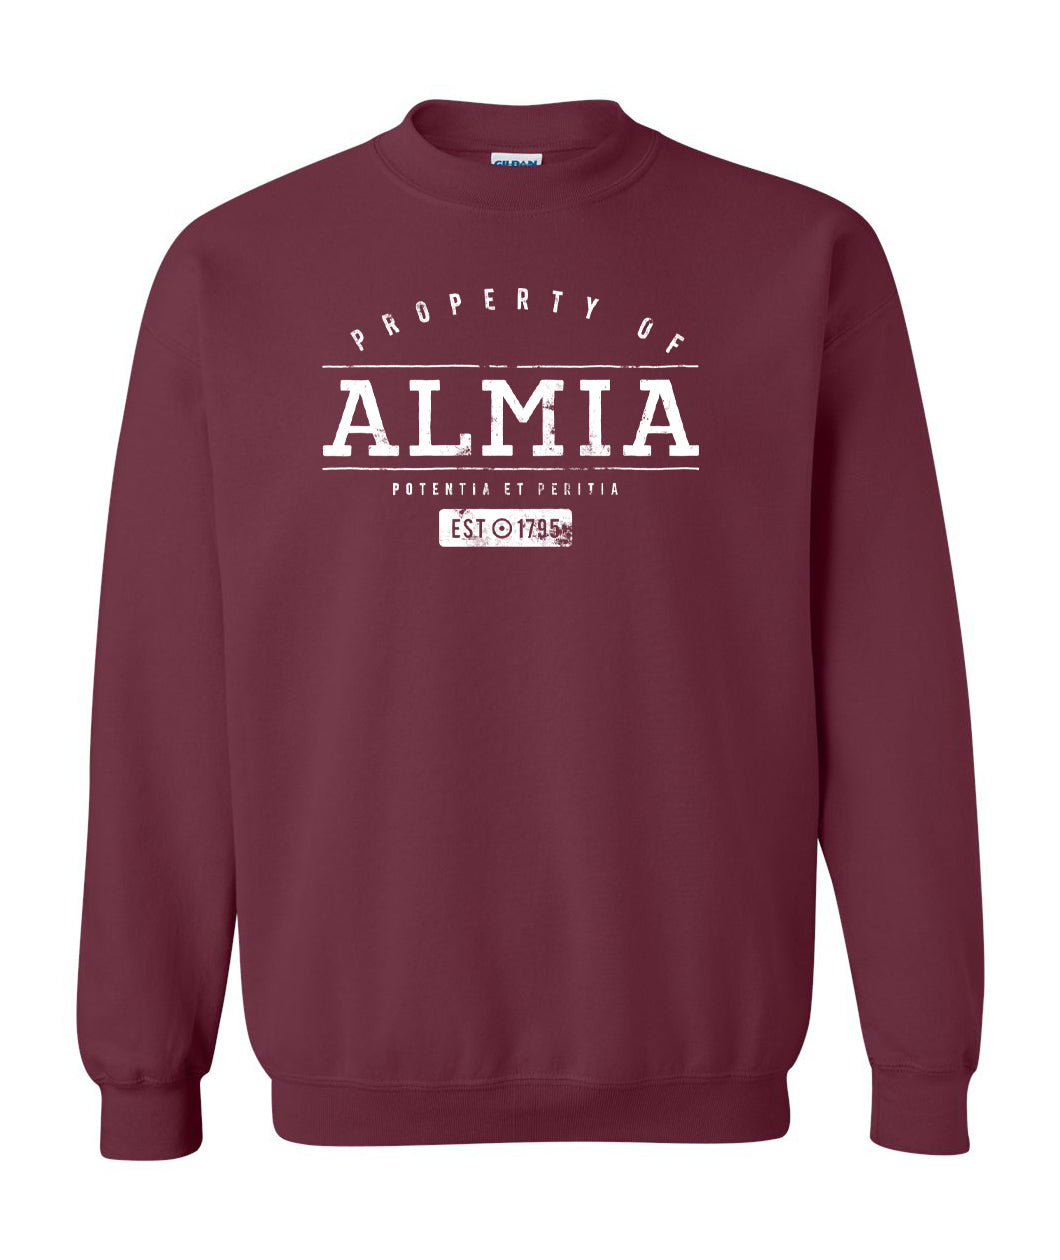 Almia Crewneck Sweatshirt